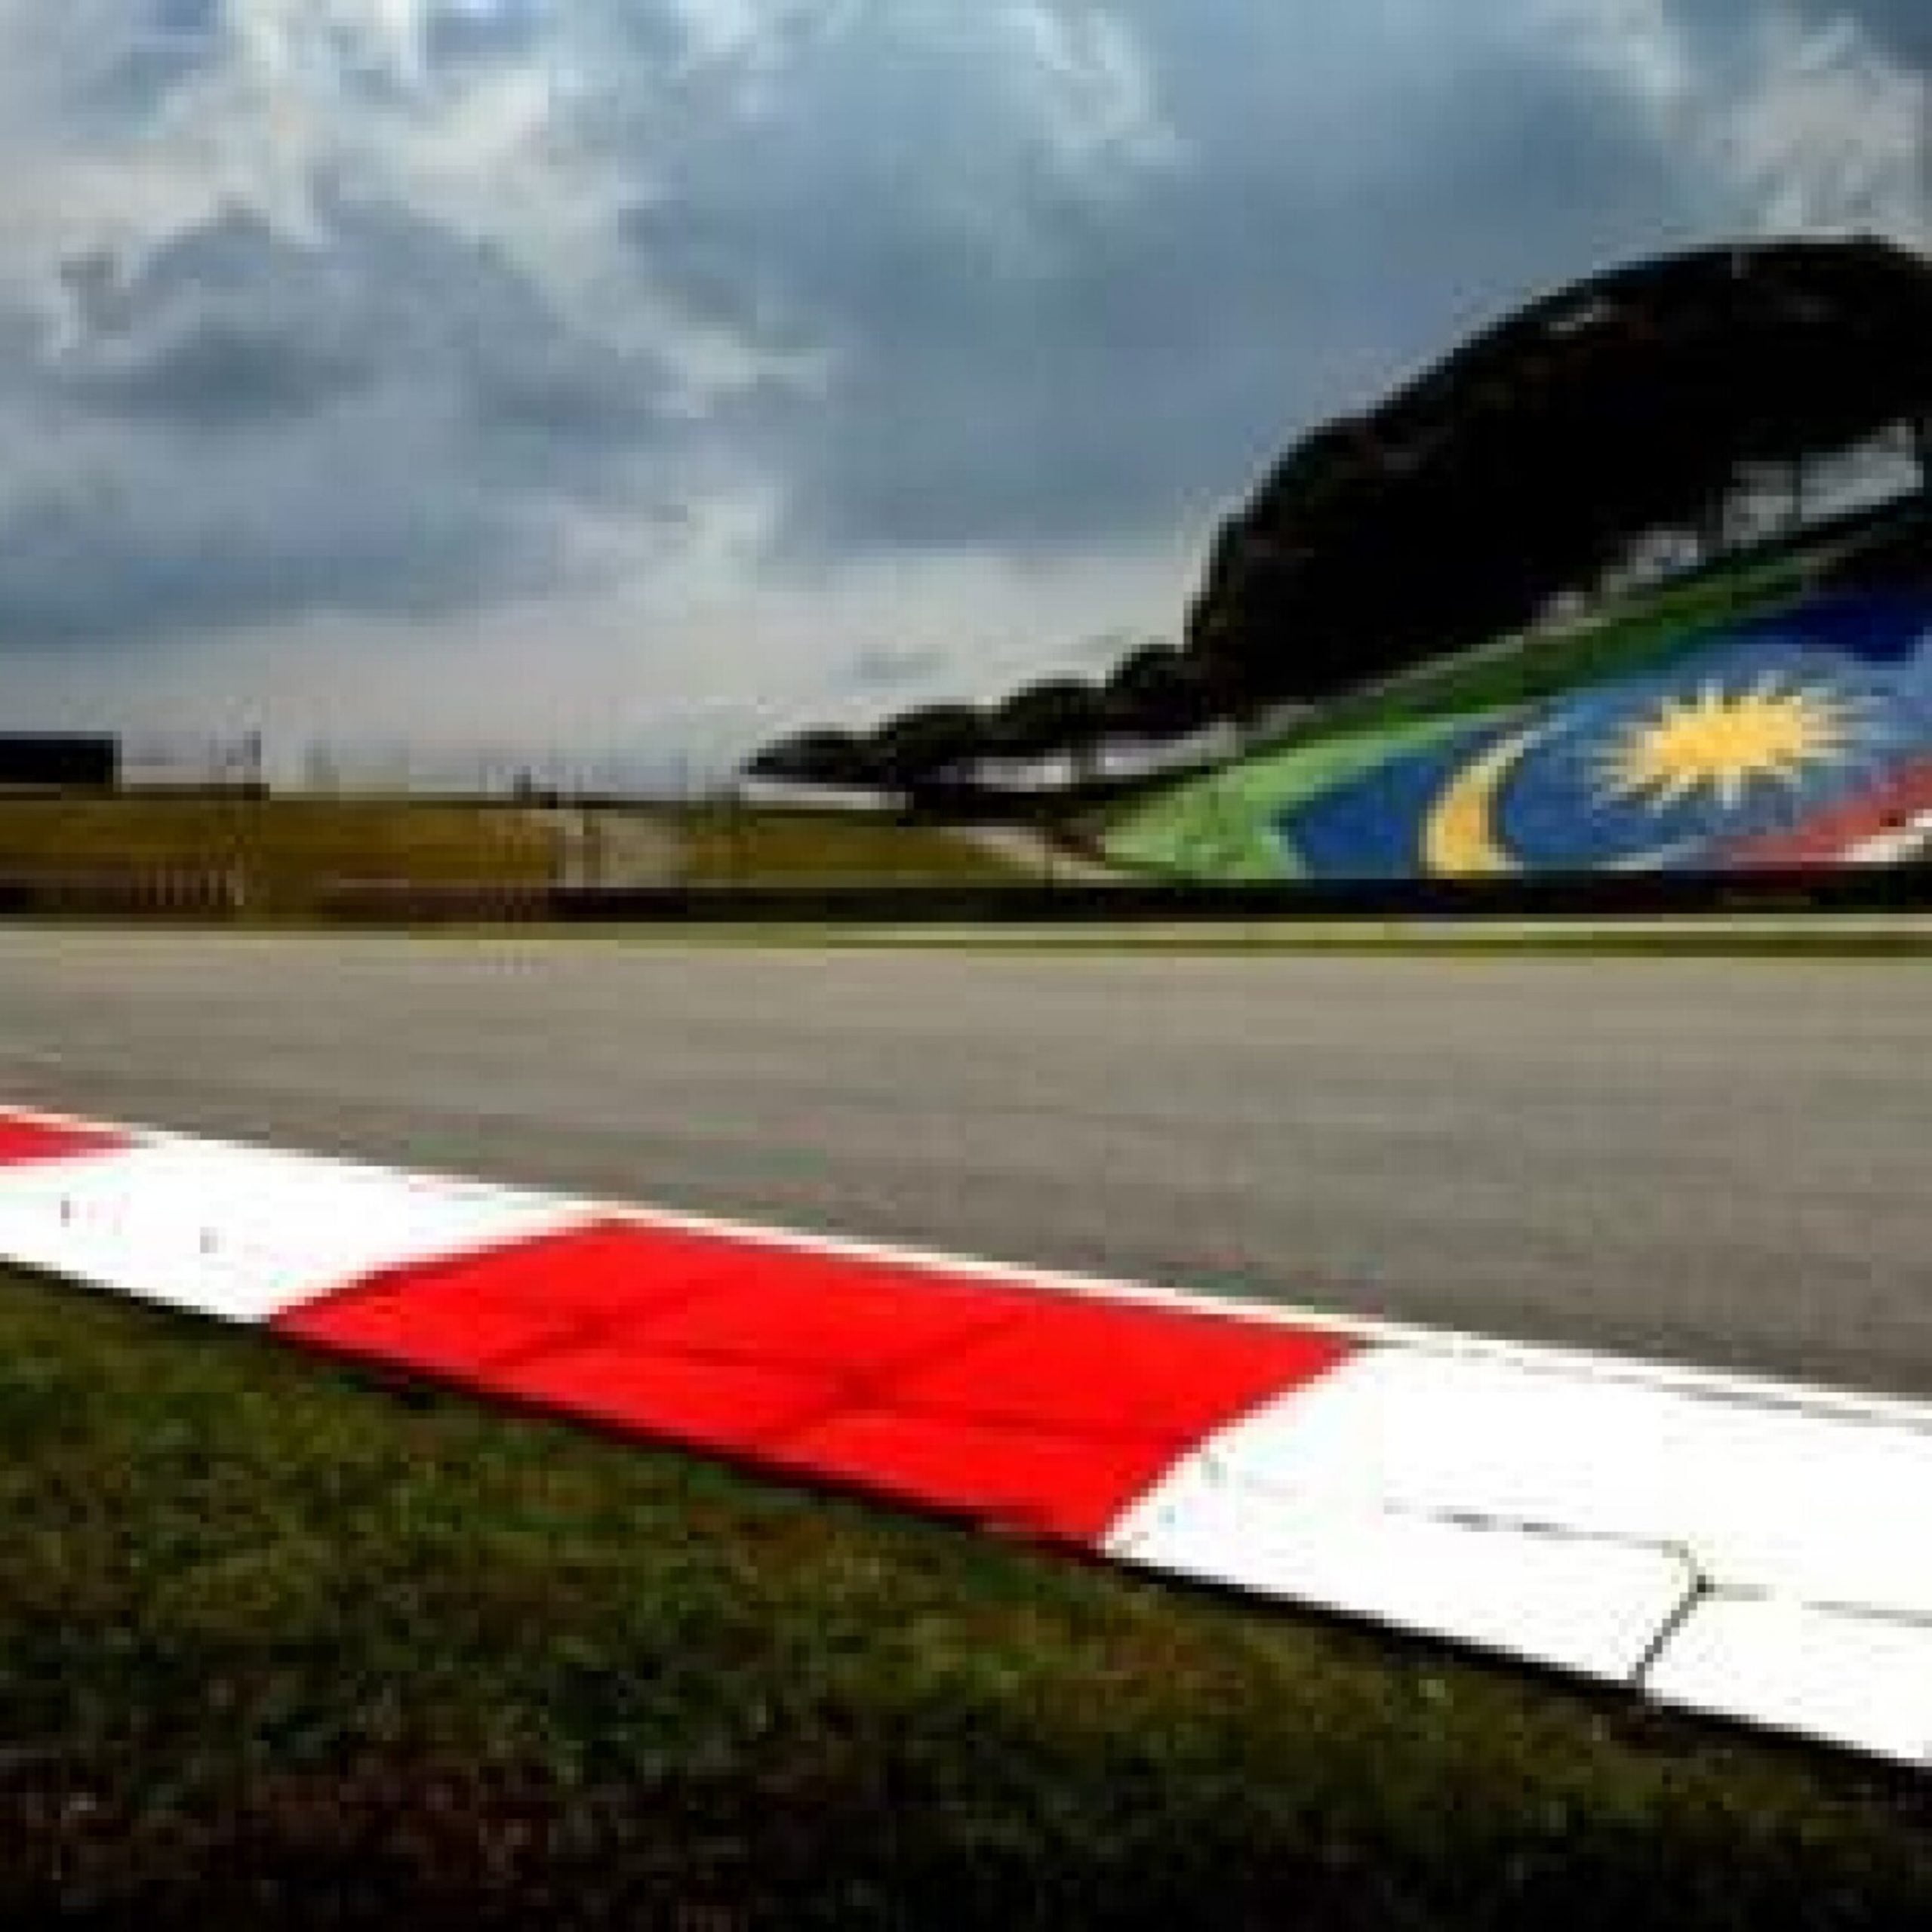 Inside Line F1 Podcast - 2013 Malaysian Grand Prix